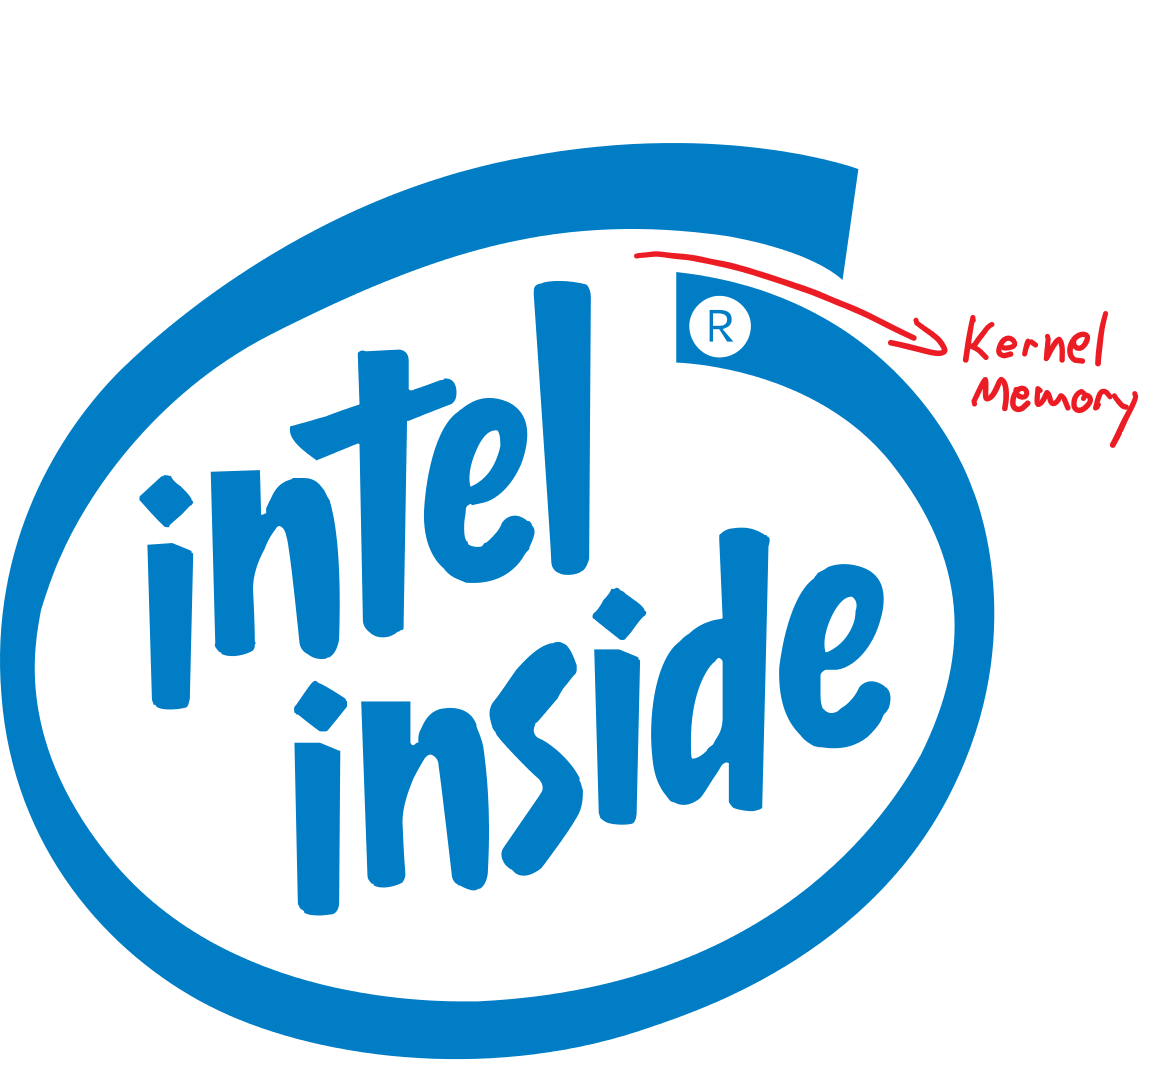 Intel Logo - The old Intel logo makes sense now : ProgrammerHumor